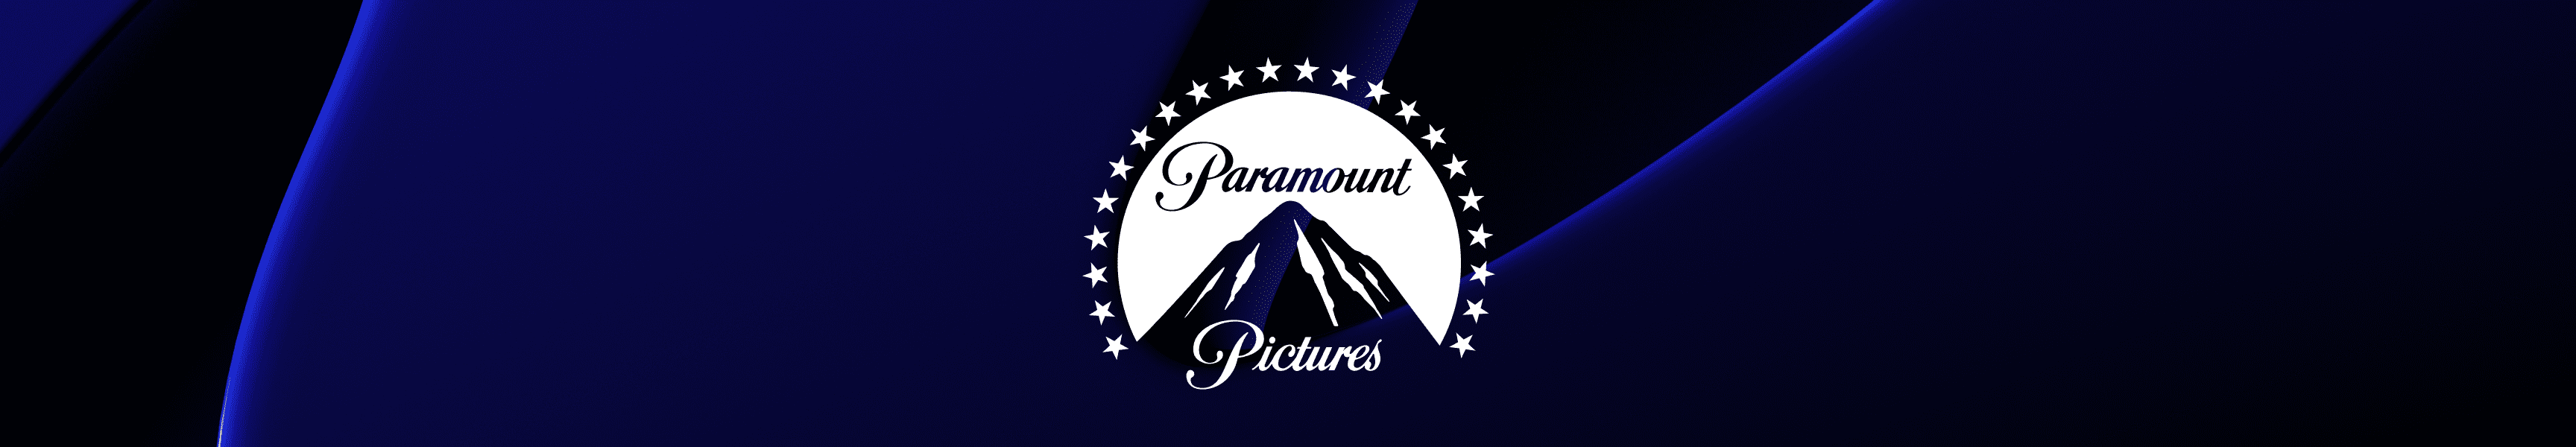 Paramount Pictures Pulls à capuche & Sweatshirts